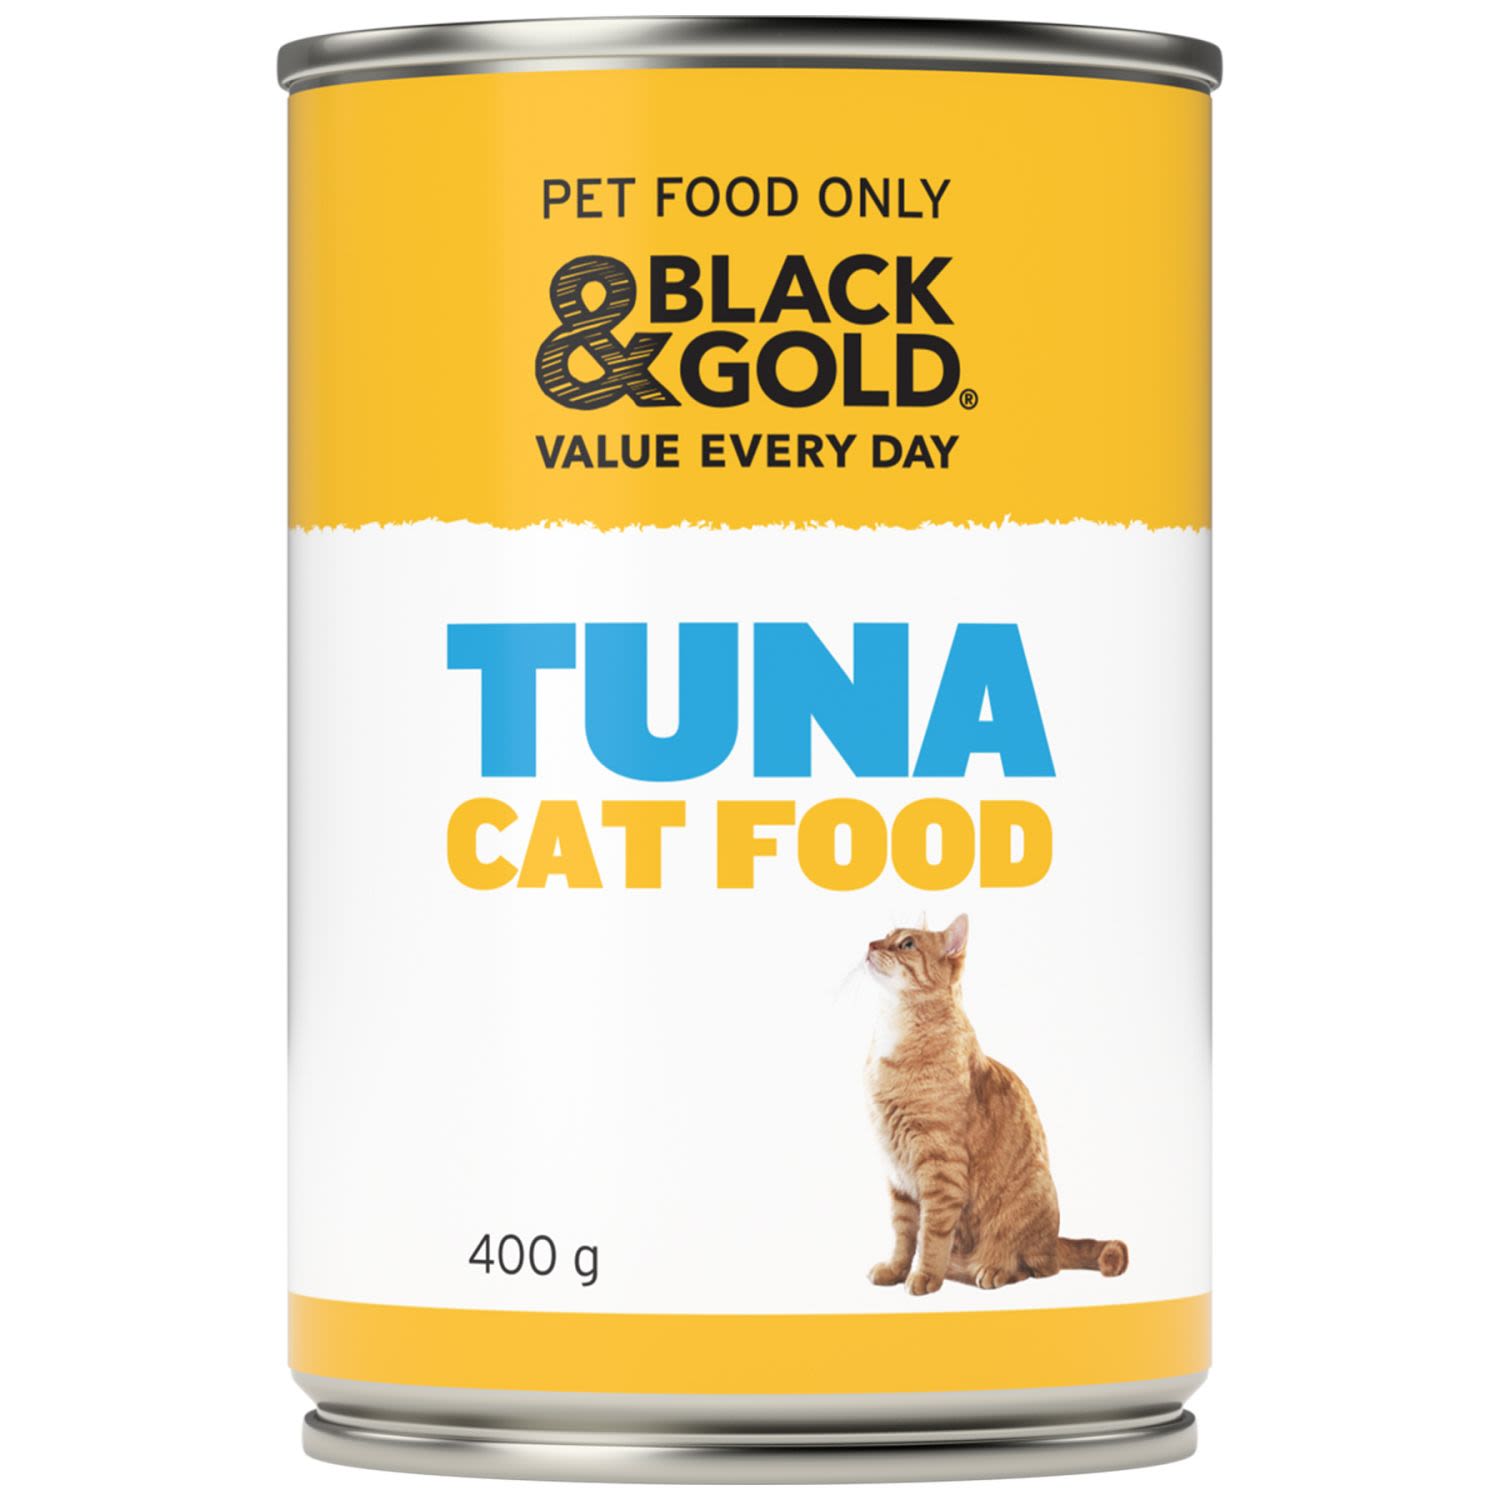 Black & Gold Cat Food Tuna, 400 Gram